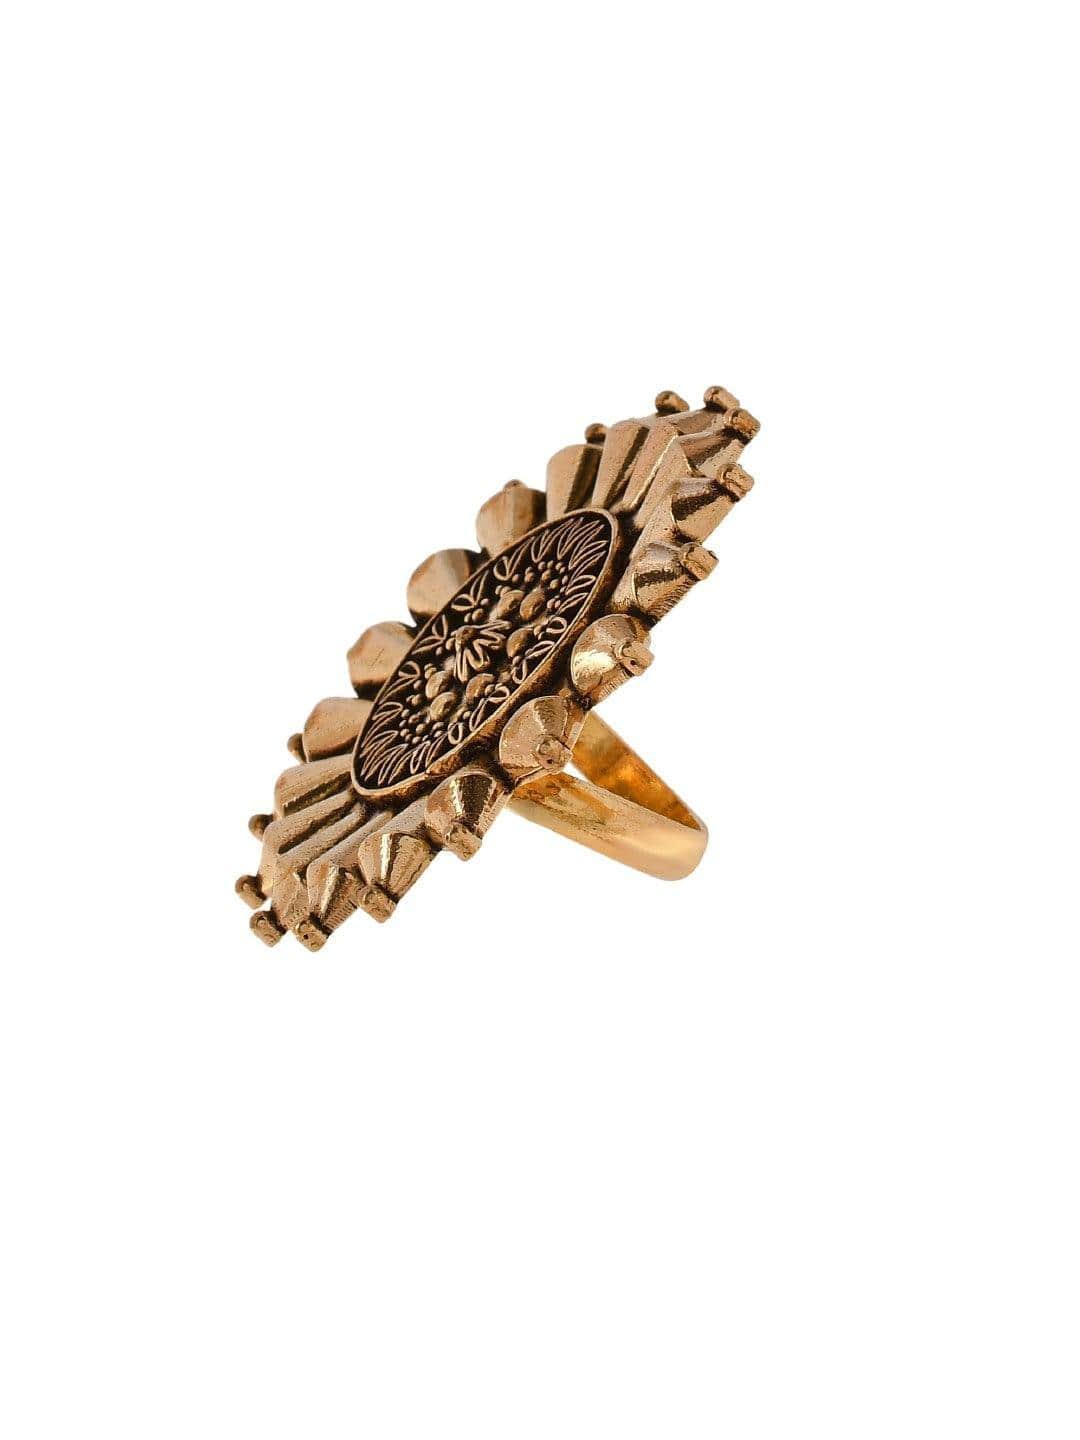 Ishhaara Sunny Leone in Oxidised Golden-Chrysathrus Ring